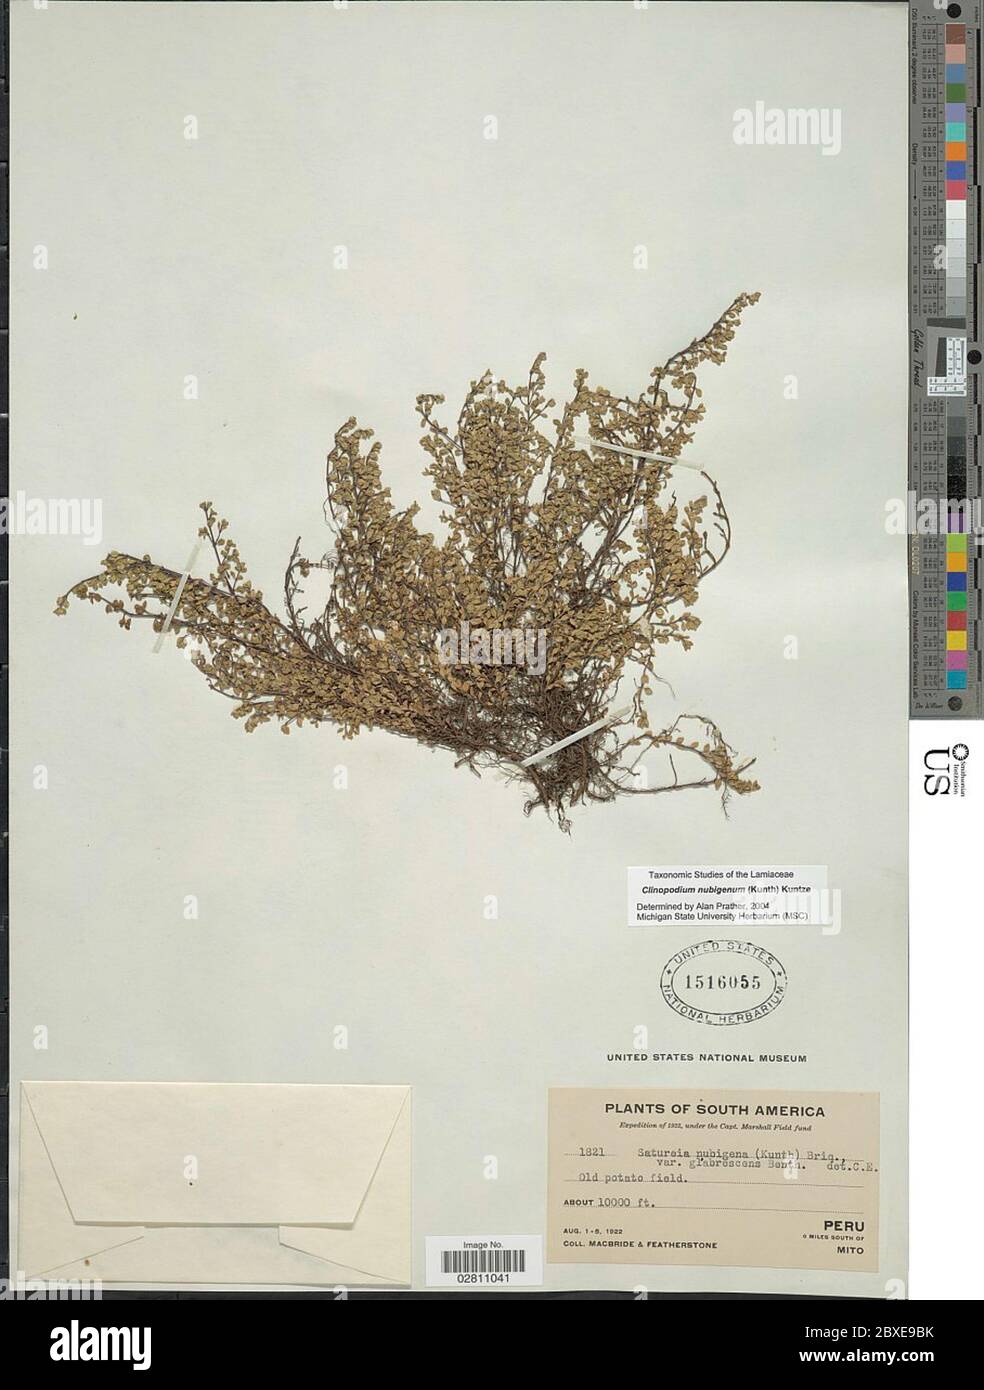 Clinopodium nubigenum Kunth Kuntze Clinopodium nubigenum Kunth Kuntze. Stock Photo